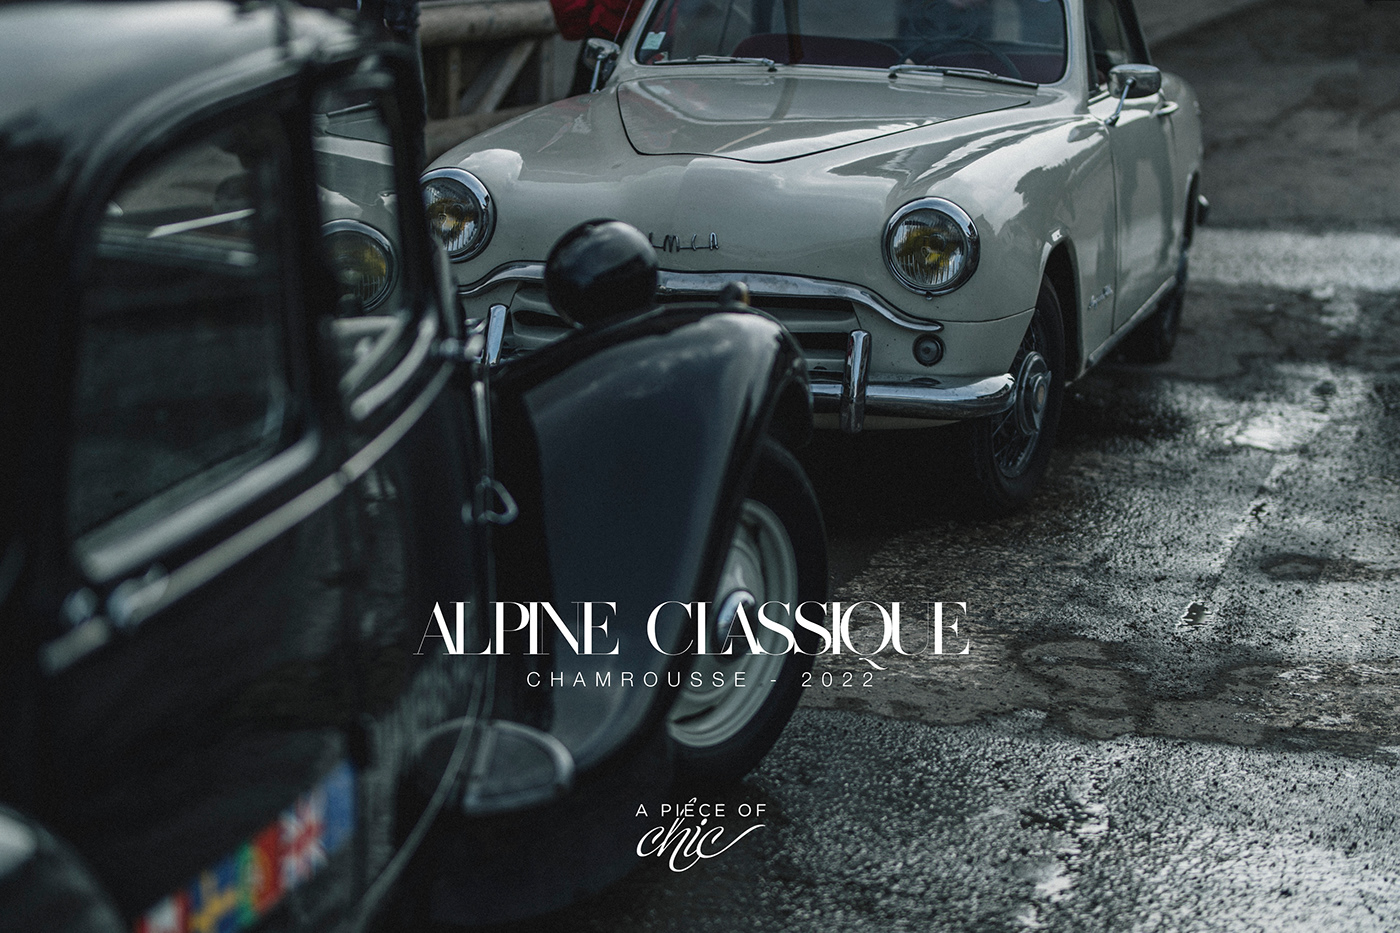 a piece of chic alpine classique Chamrousse oldies Retro vintage vintage cars Vintage clothing vintage motorcycles